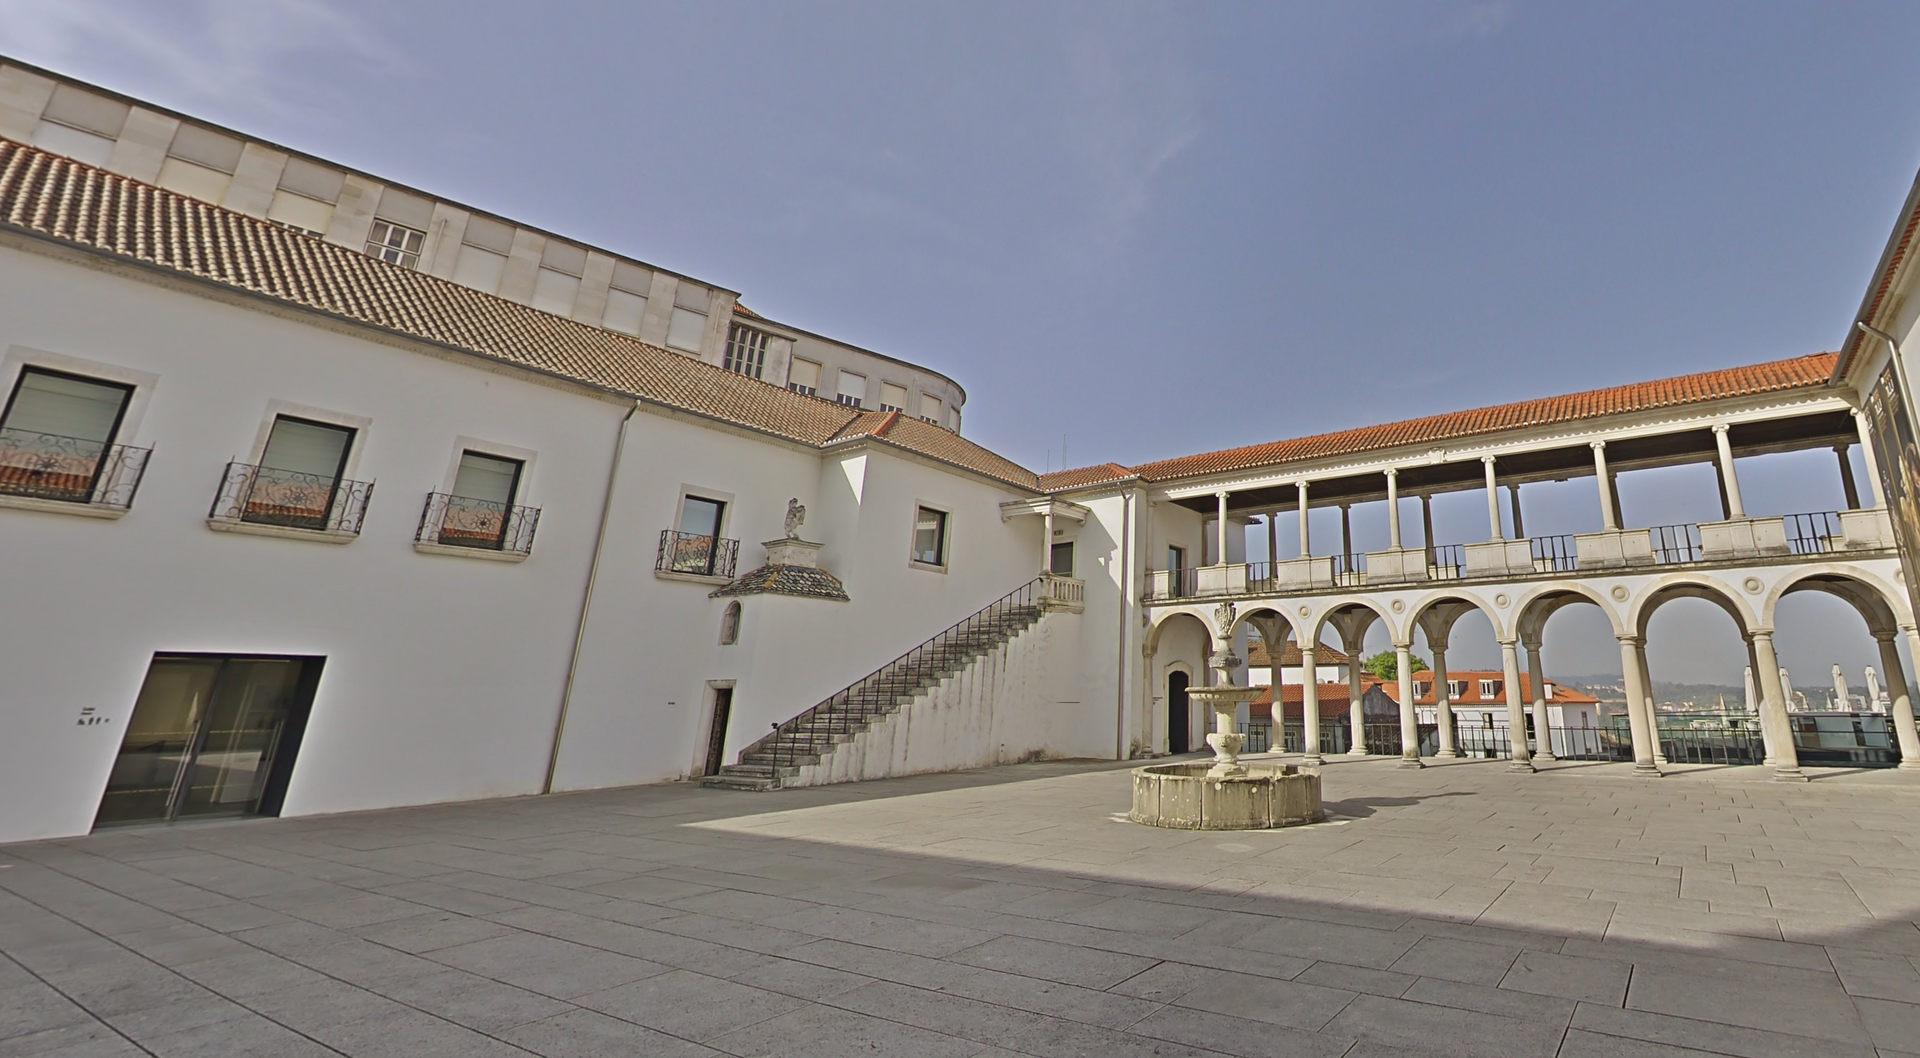 Peruse the Machado de Castro National Museum by Google Earth